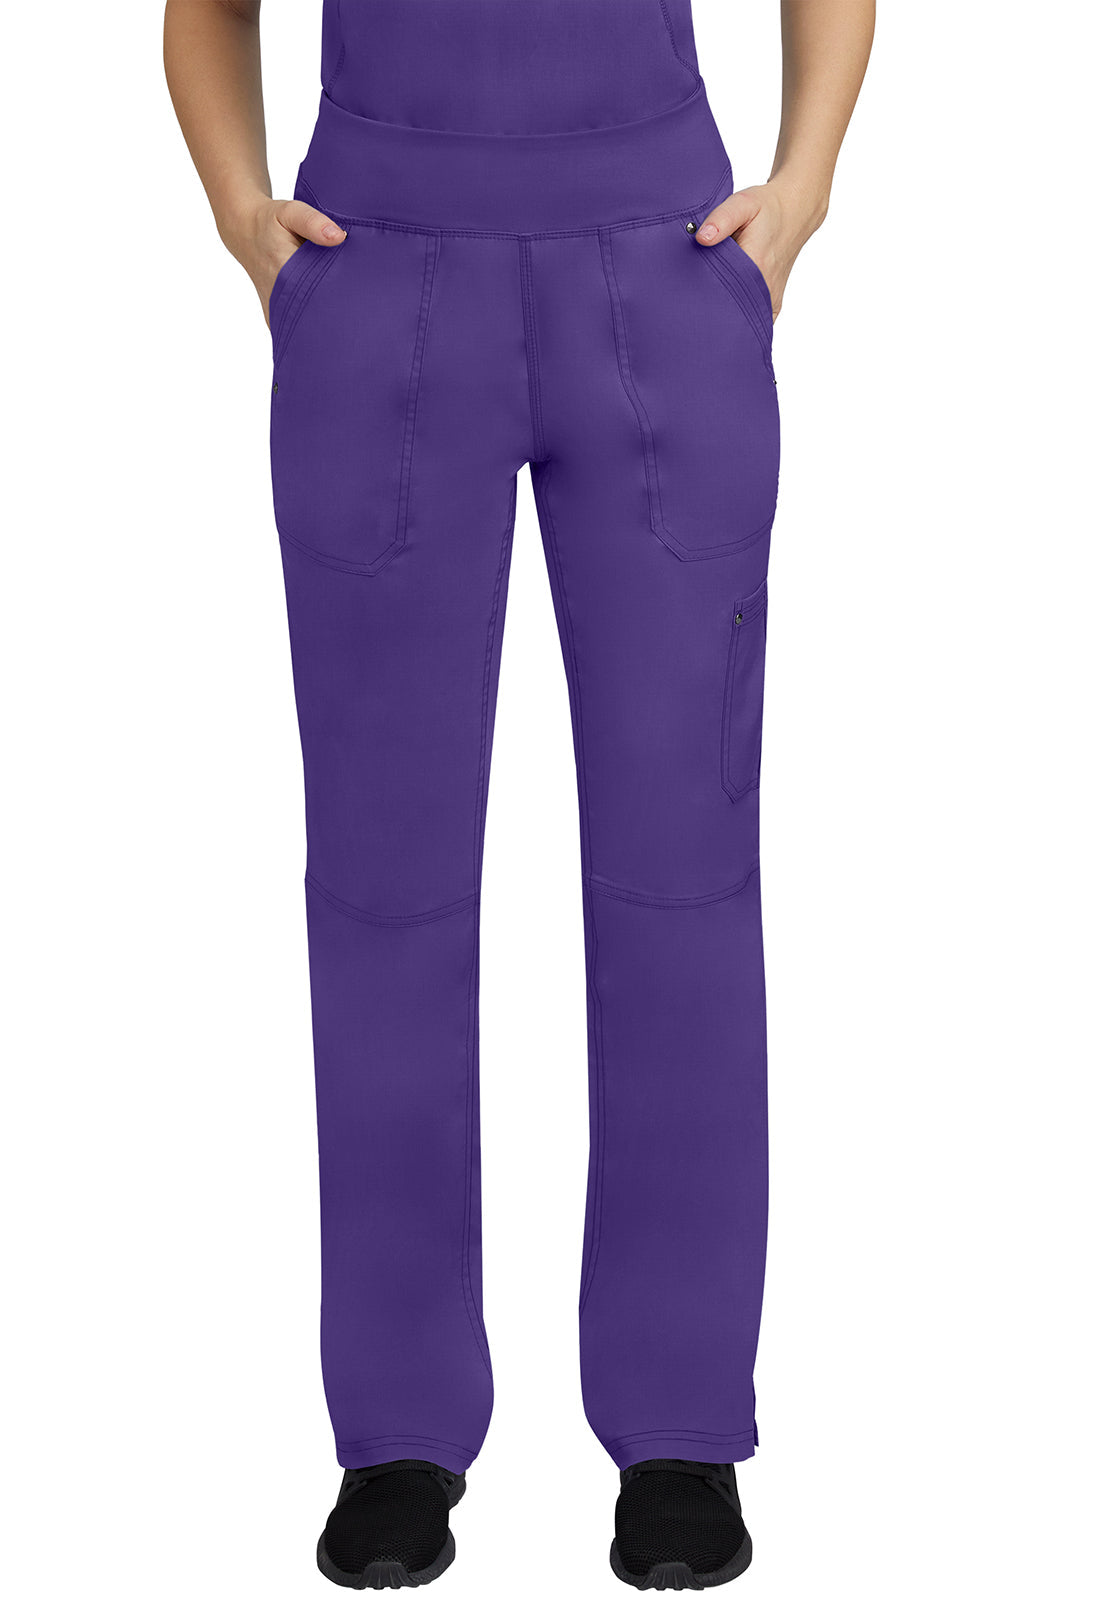 Healing Hands Purple Label Tori Yoga Pants (Tall Up to 2XL)